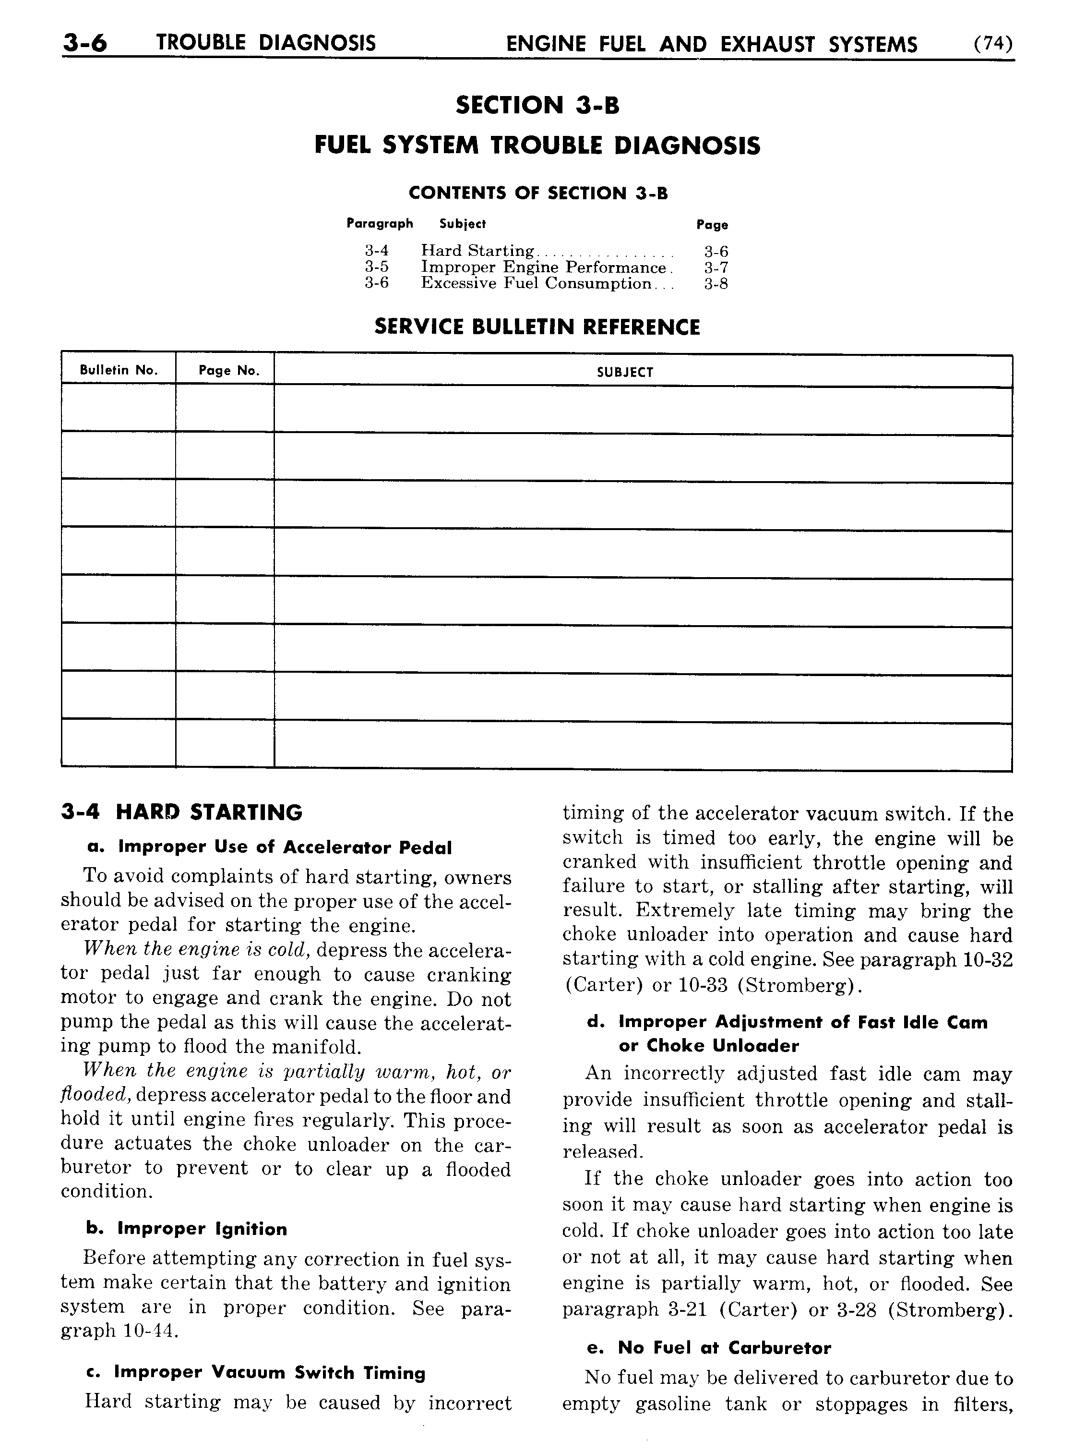 n_04 1951 Buick Shop Manual - Engine Fuel & Exhaust-006-006.jpg